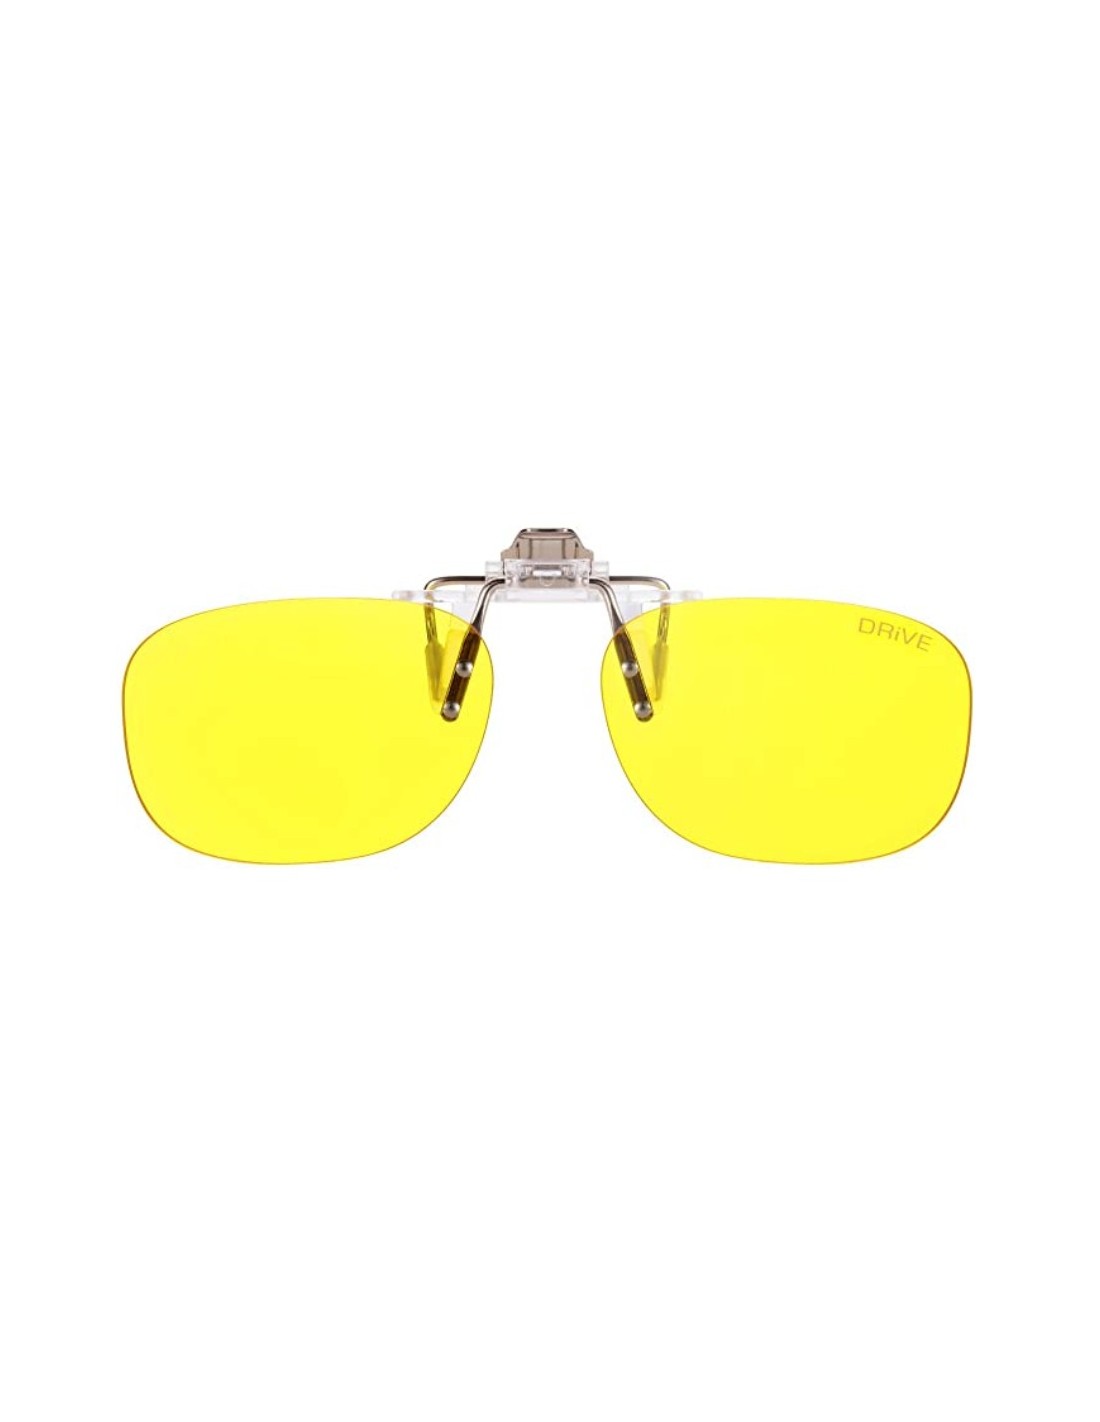 https://www.geotellurique.fr/5289-thickbox_default/lunettes-anti-ondes-prisma-office-clip-on.jpg